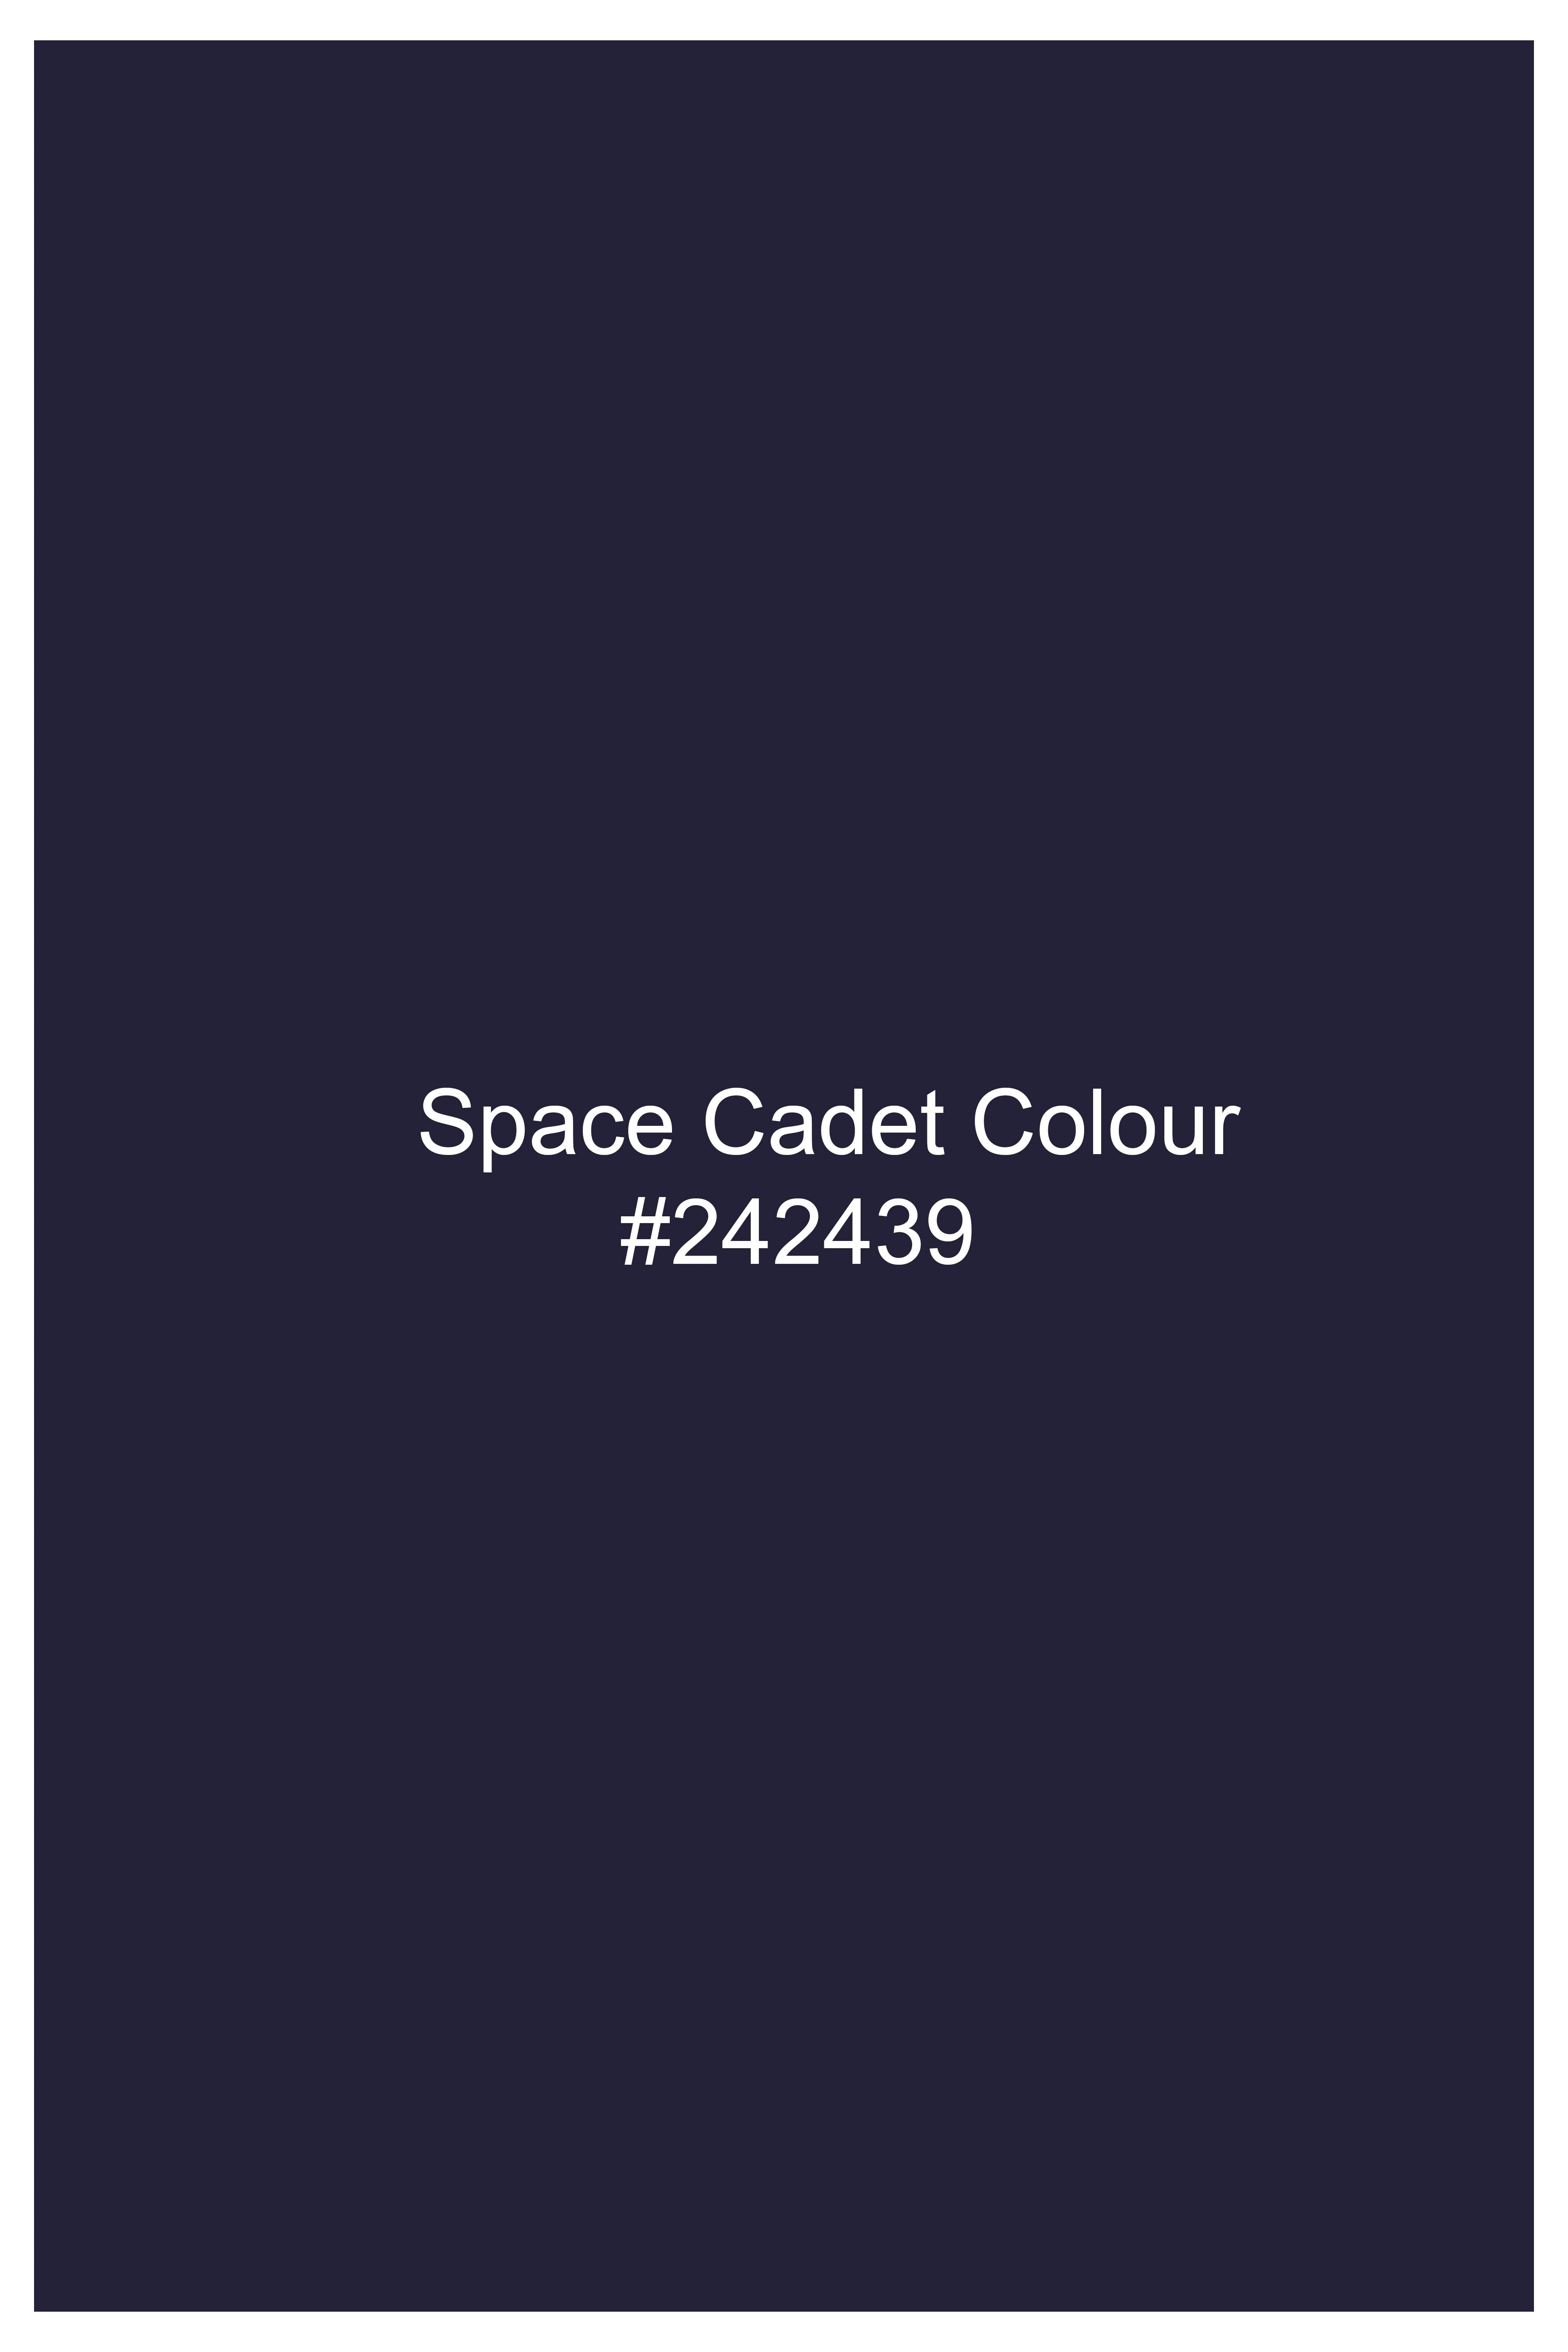 Space Cadet Blue Horizontal Stitched Wool Rich Bandhgala Designer Blazer BL3016-BG-D168-36, BL3016-BG-D168-38, BL3016-BG-D168-40, BL3016-BG-D168-42, BL3016-BG-D168-44, BL3016-BG-D168-46, BL3016-BG-D168-48, BL3016-BG-D168-50, BL3016-BG-D168-52, BL3016-BG-D168-54, BL3016-BG-D168-56, BL3016-BG-D168-58, BL3016-BG-D168-60